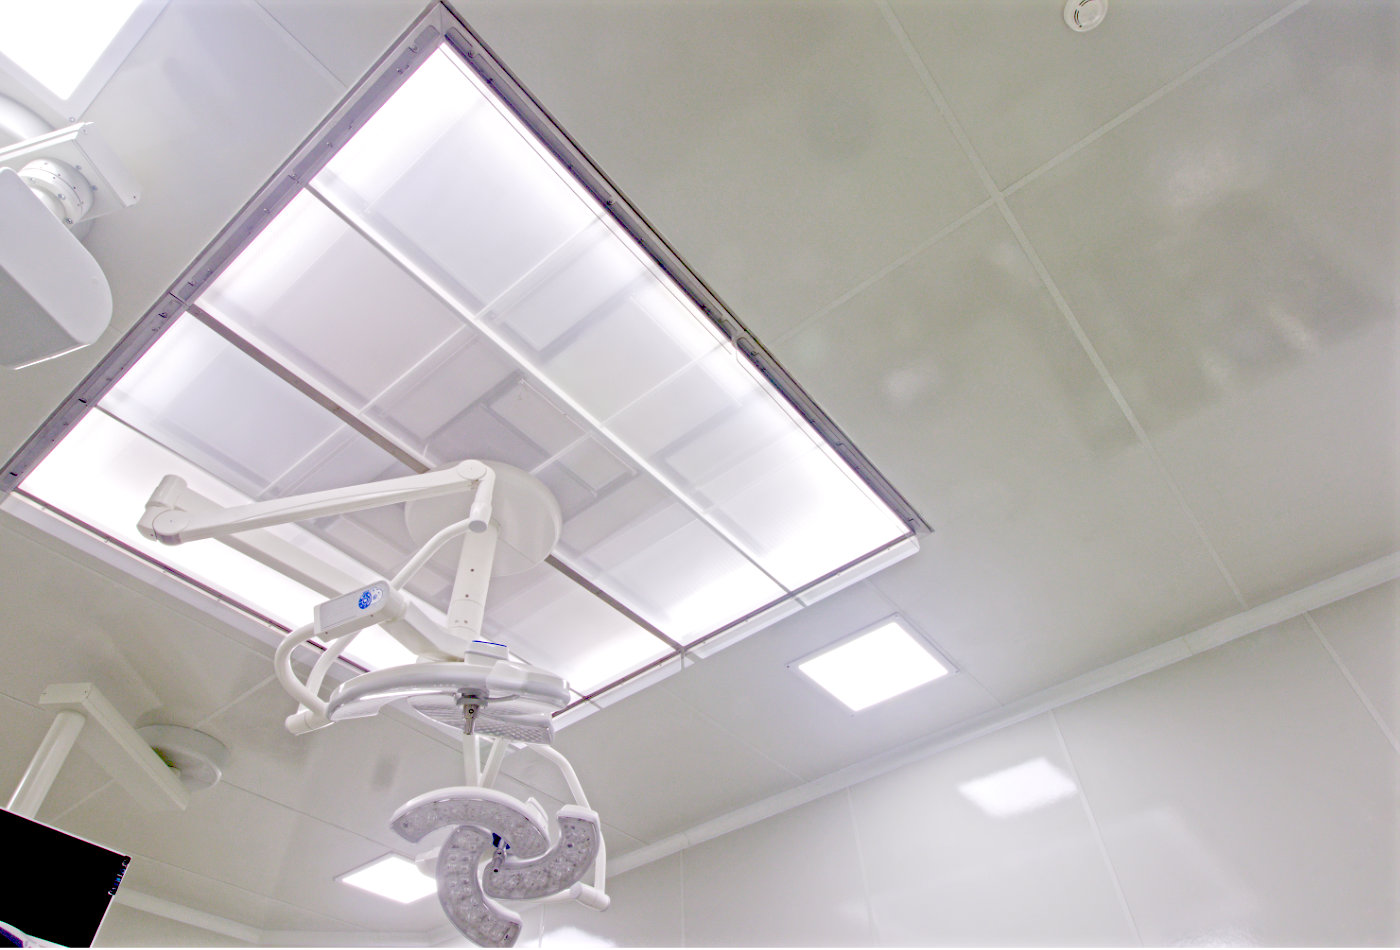 Fırat University surgery room GRP hygienic dropped ceiling